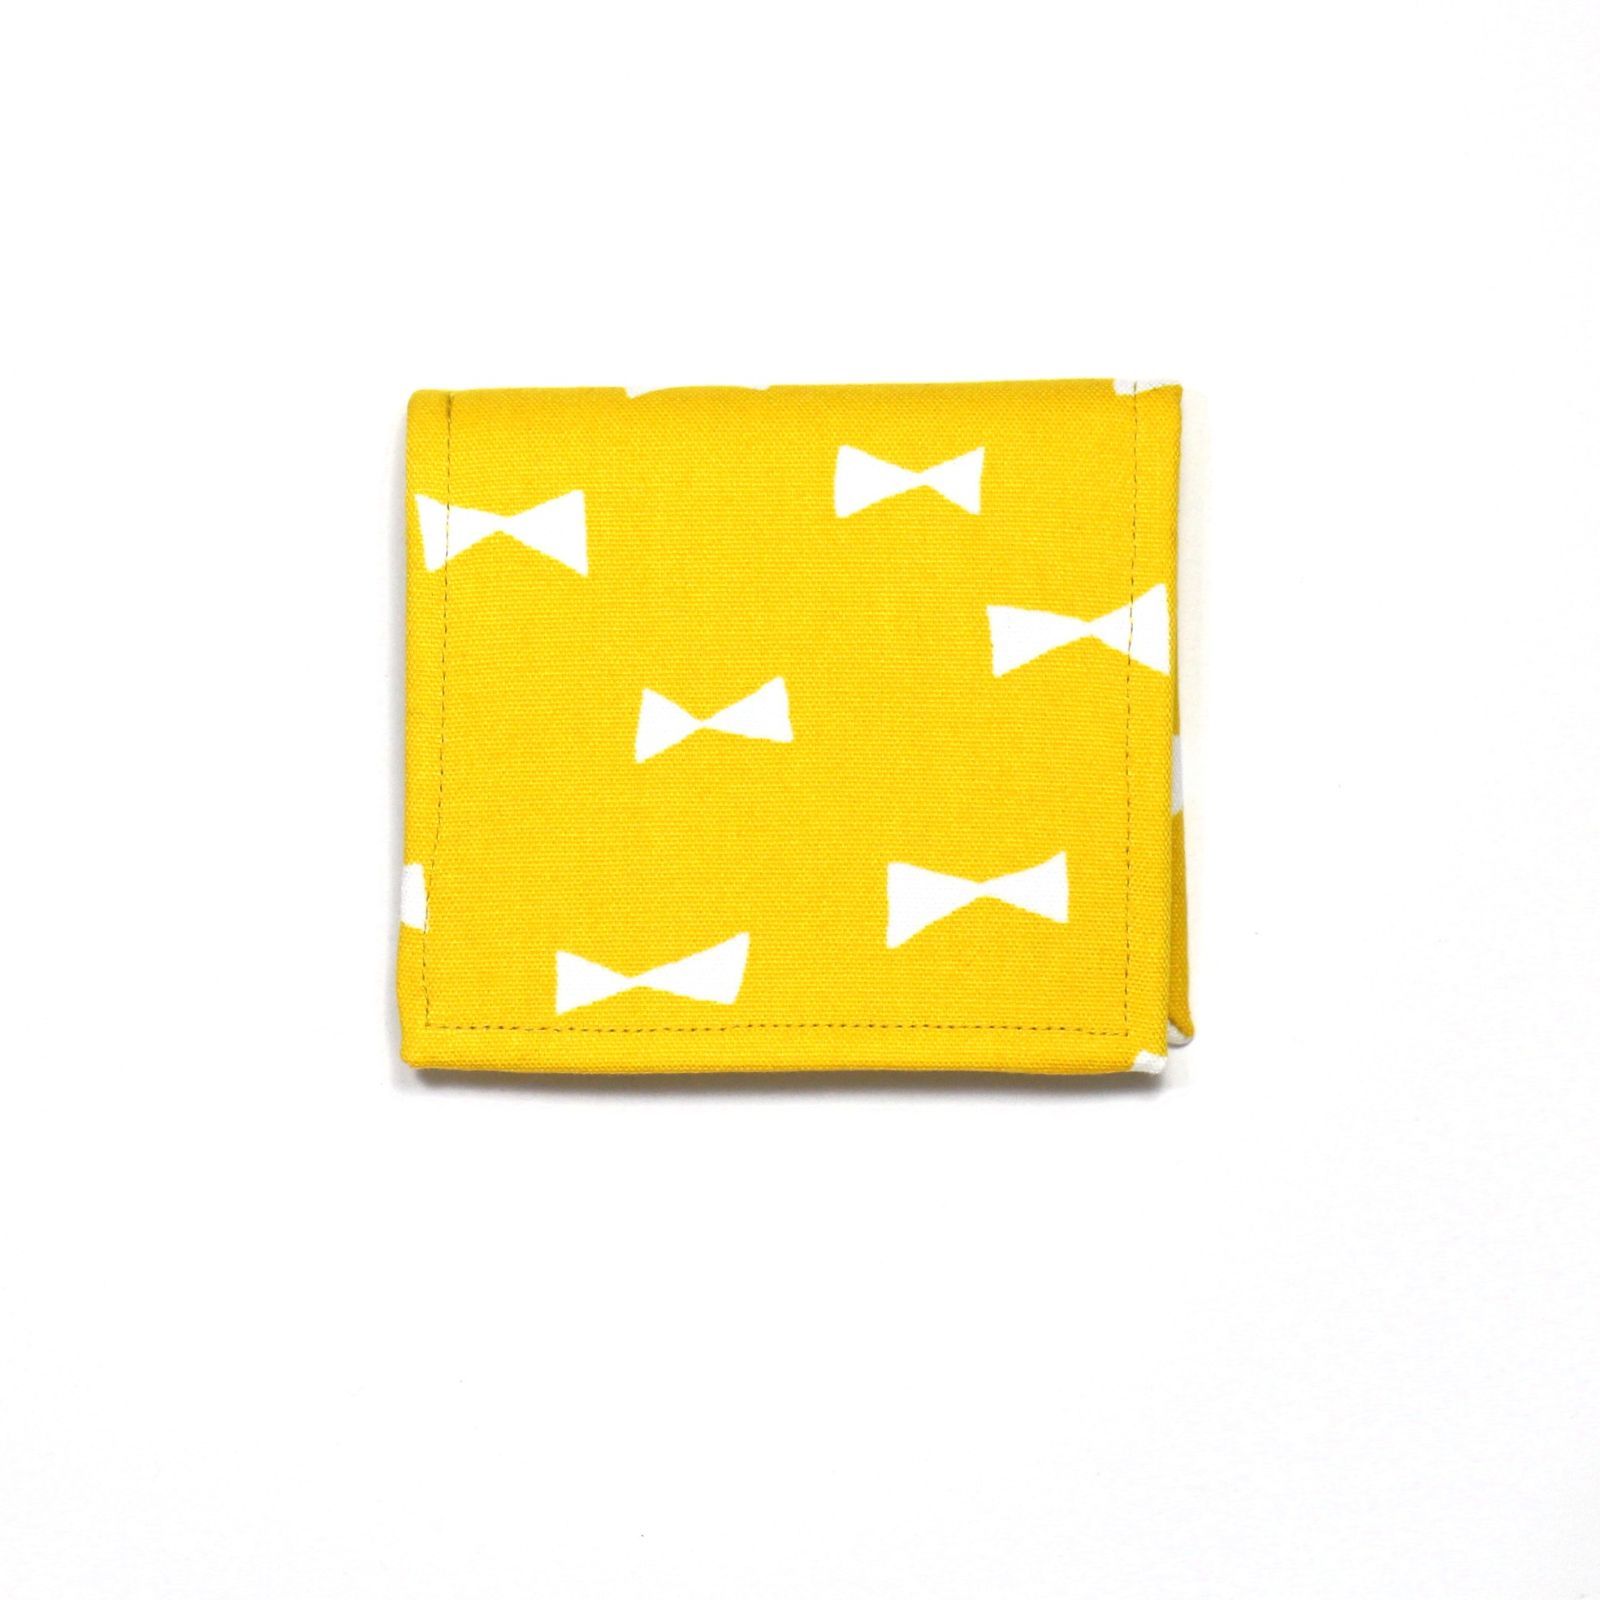 rib.Y】コンパクト 色変更可 シンプル二つ折り財布 北欧柄 黄色リボン